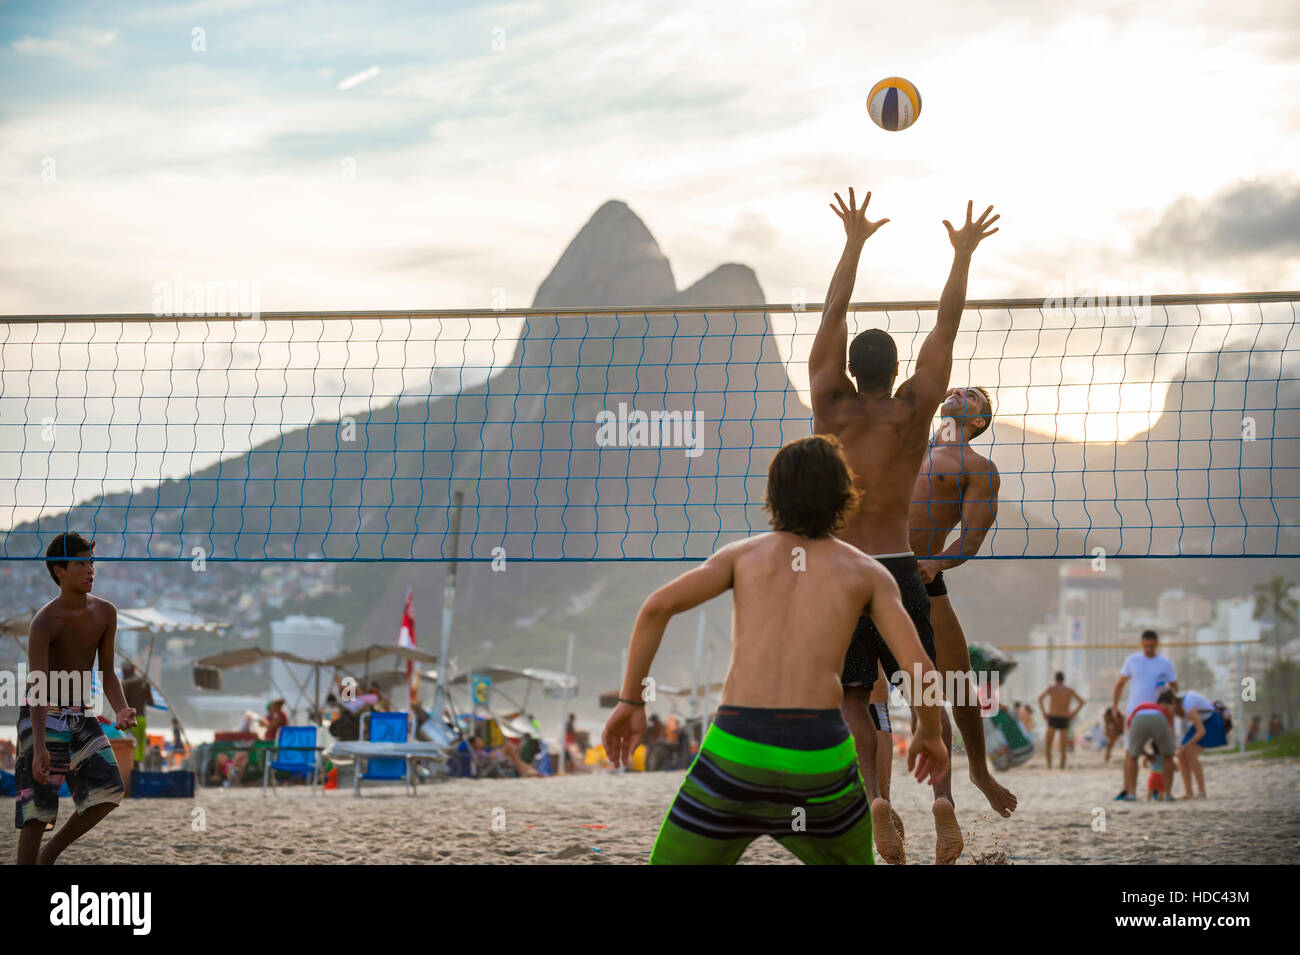 RIO DE JANEIRO - MARCH 20, 2016: Young carioca Brazilians play beach volleyball against a sunset silhouette of Ipanema Beach. Stock Photo